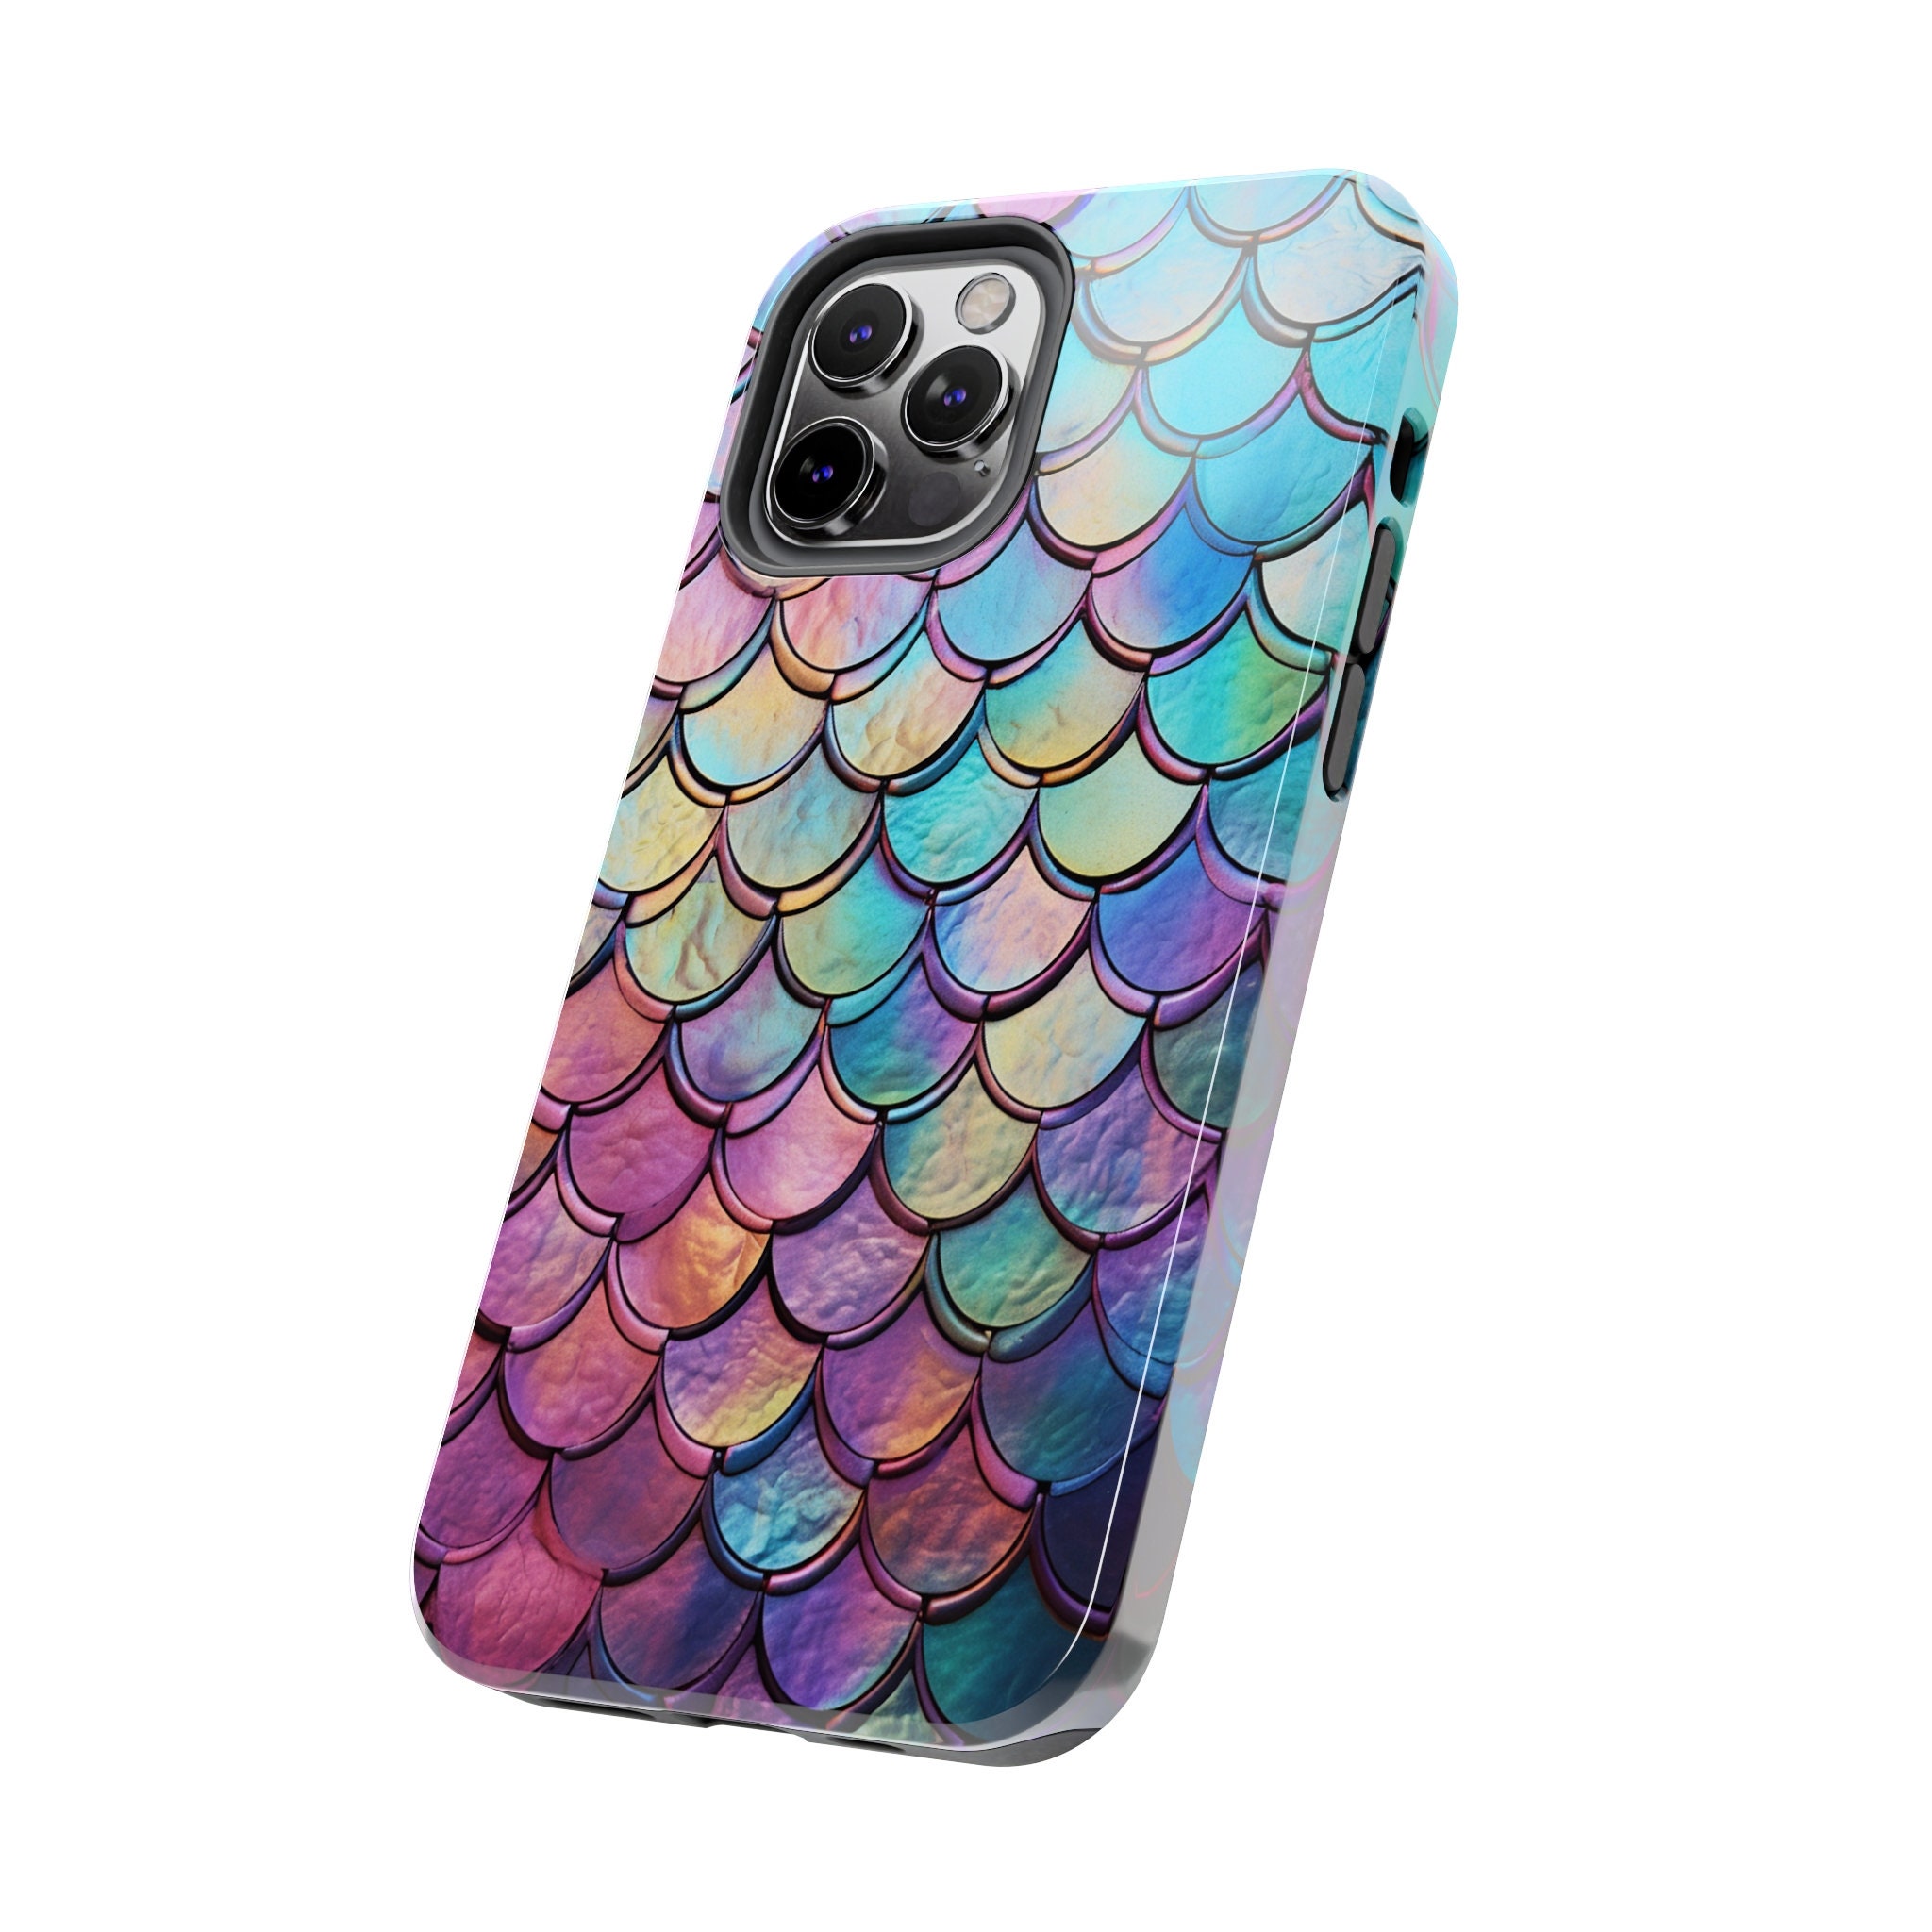 Luxury Clear Square iPhone Case – Mermaid Case